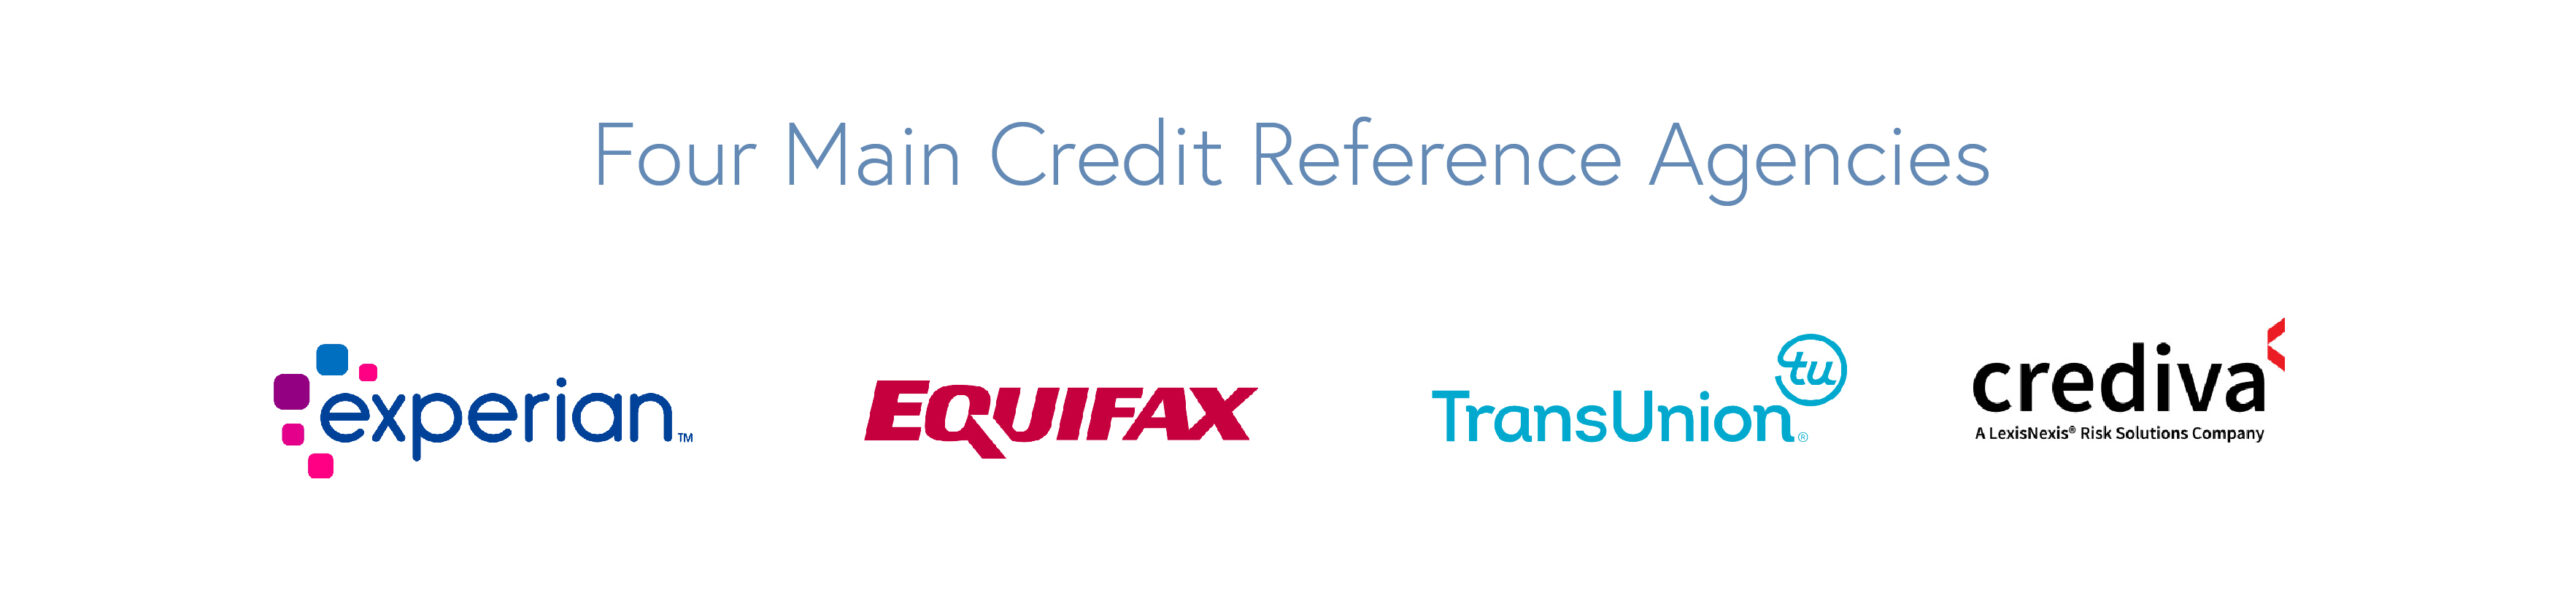 logos of UK credit reference agencies